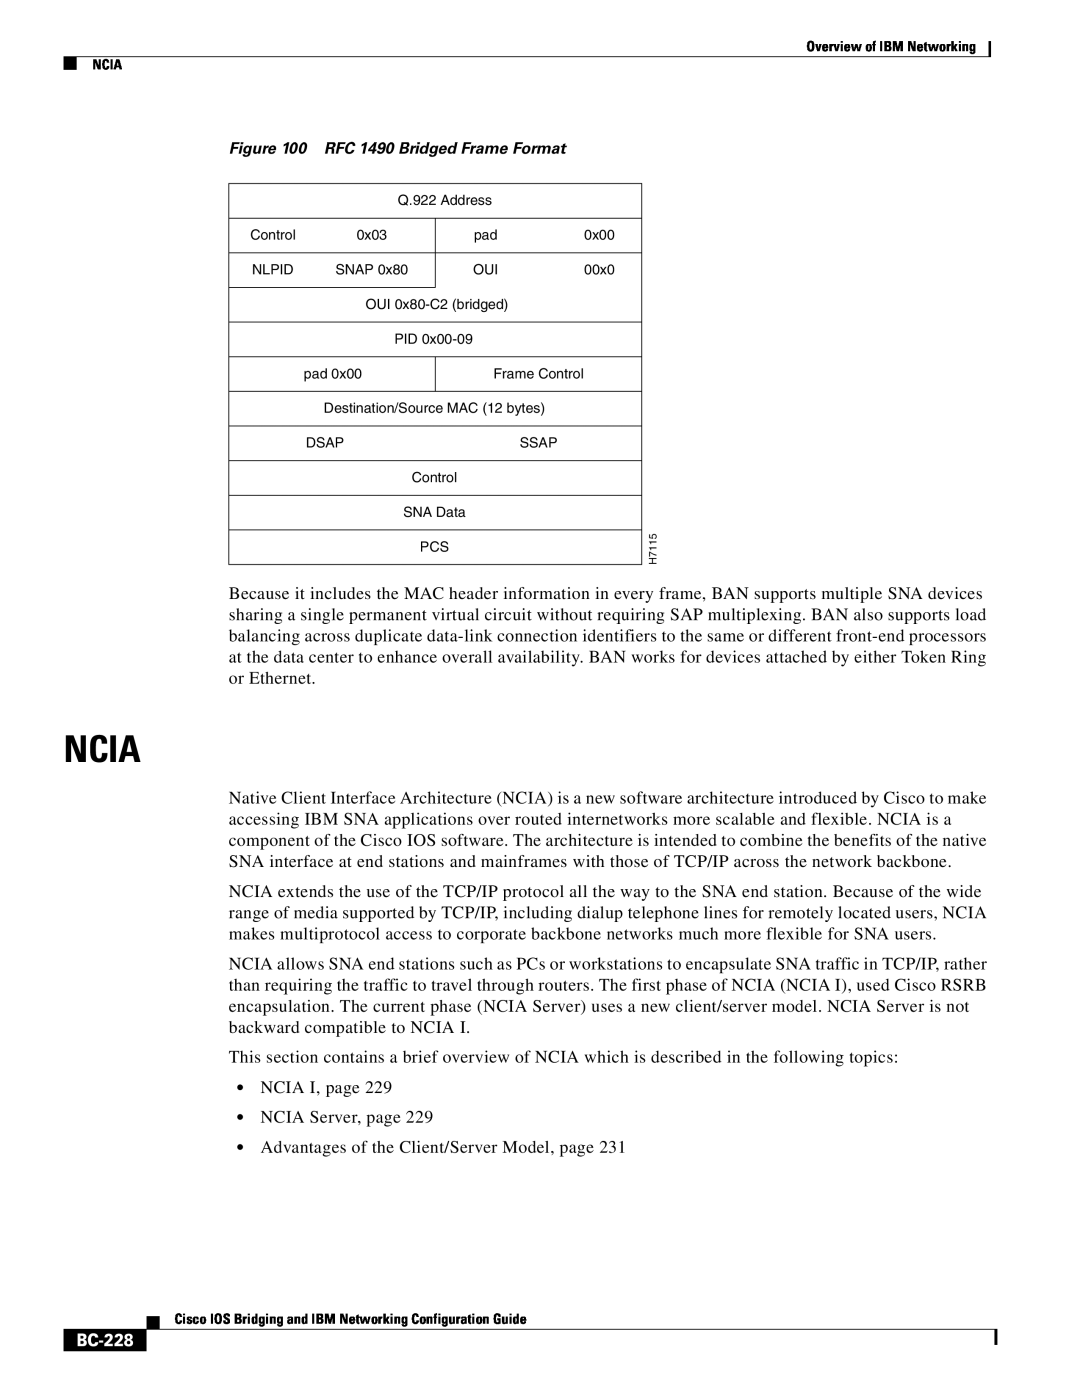 IBM BC-203 manual Ncia, BC-228 